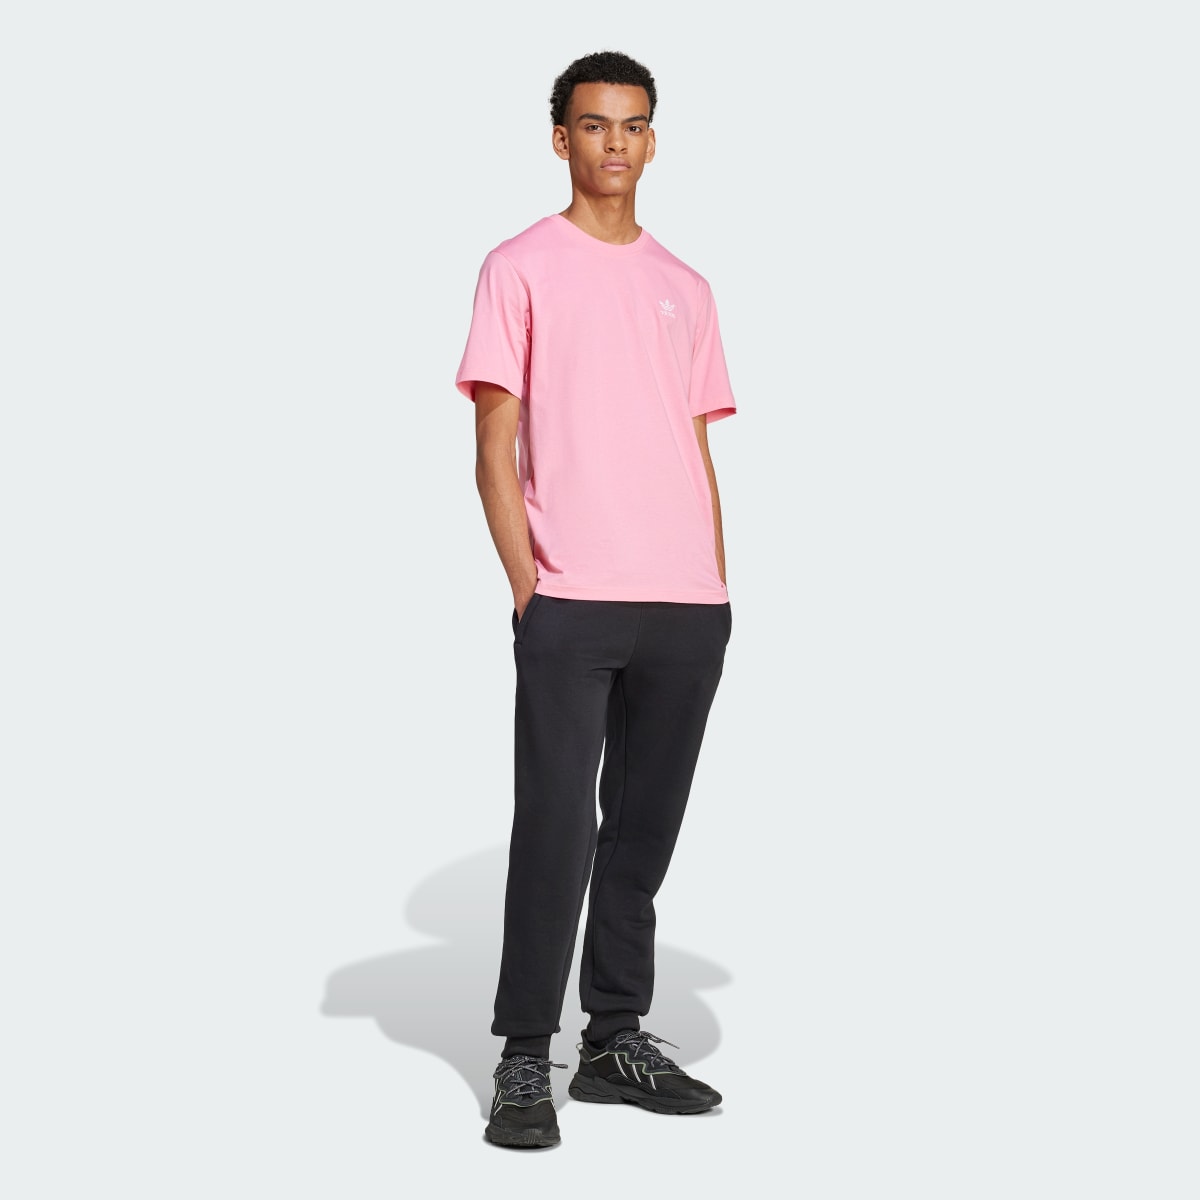 Adidas T-shirt rose. 4